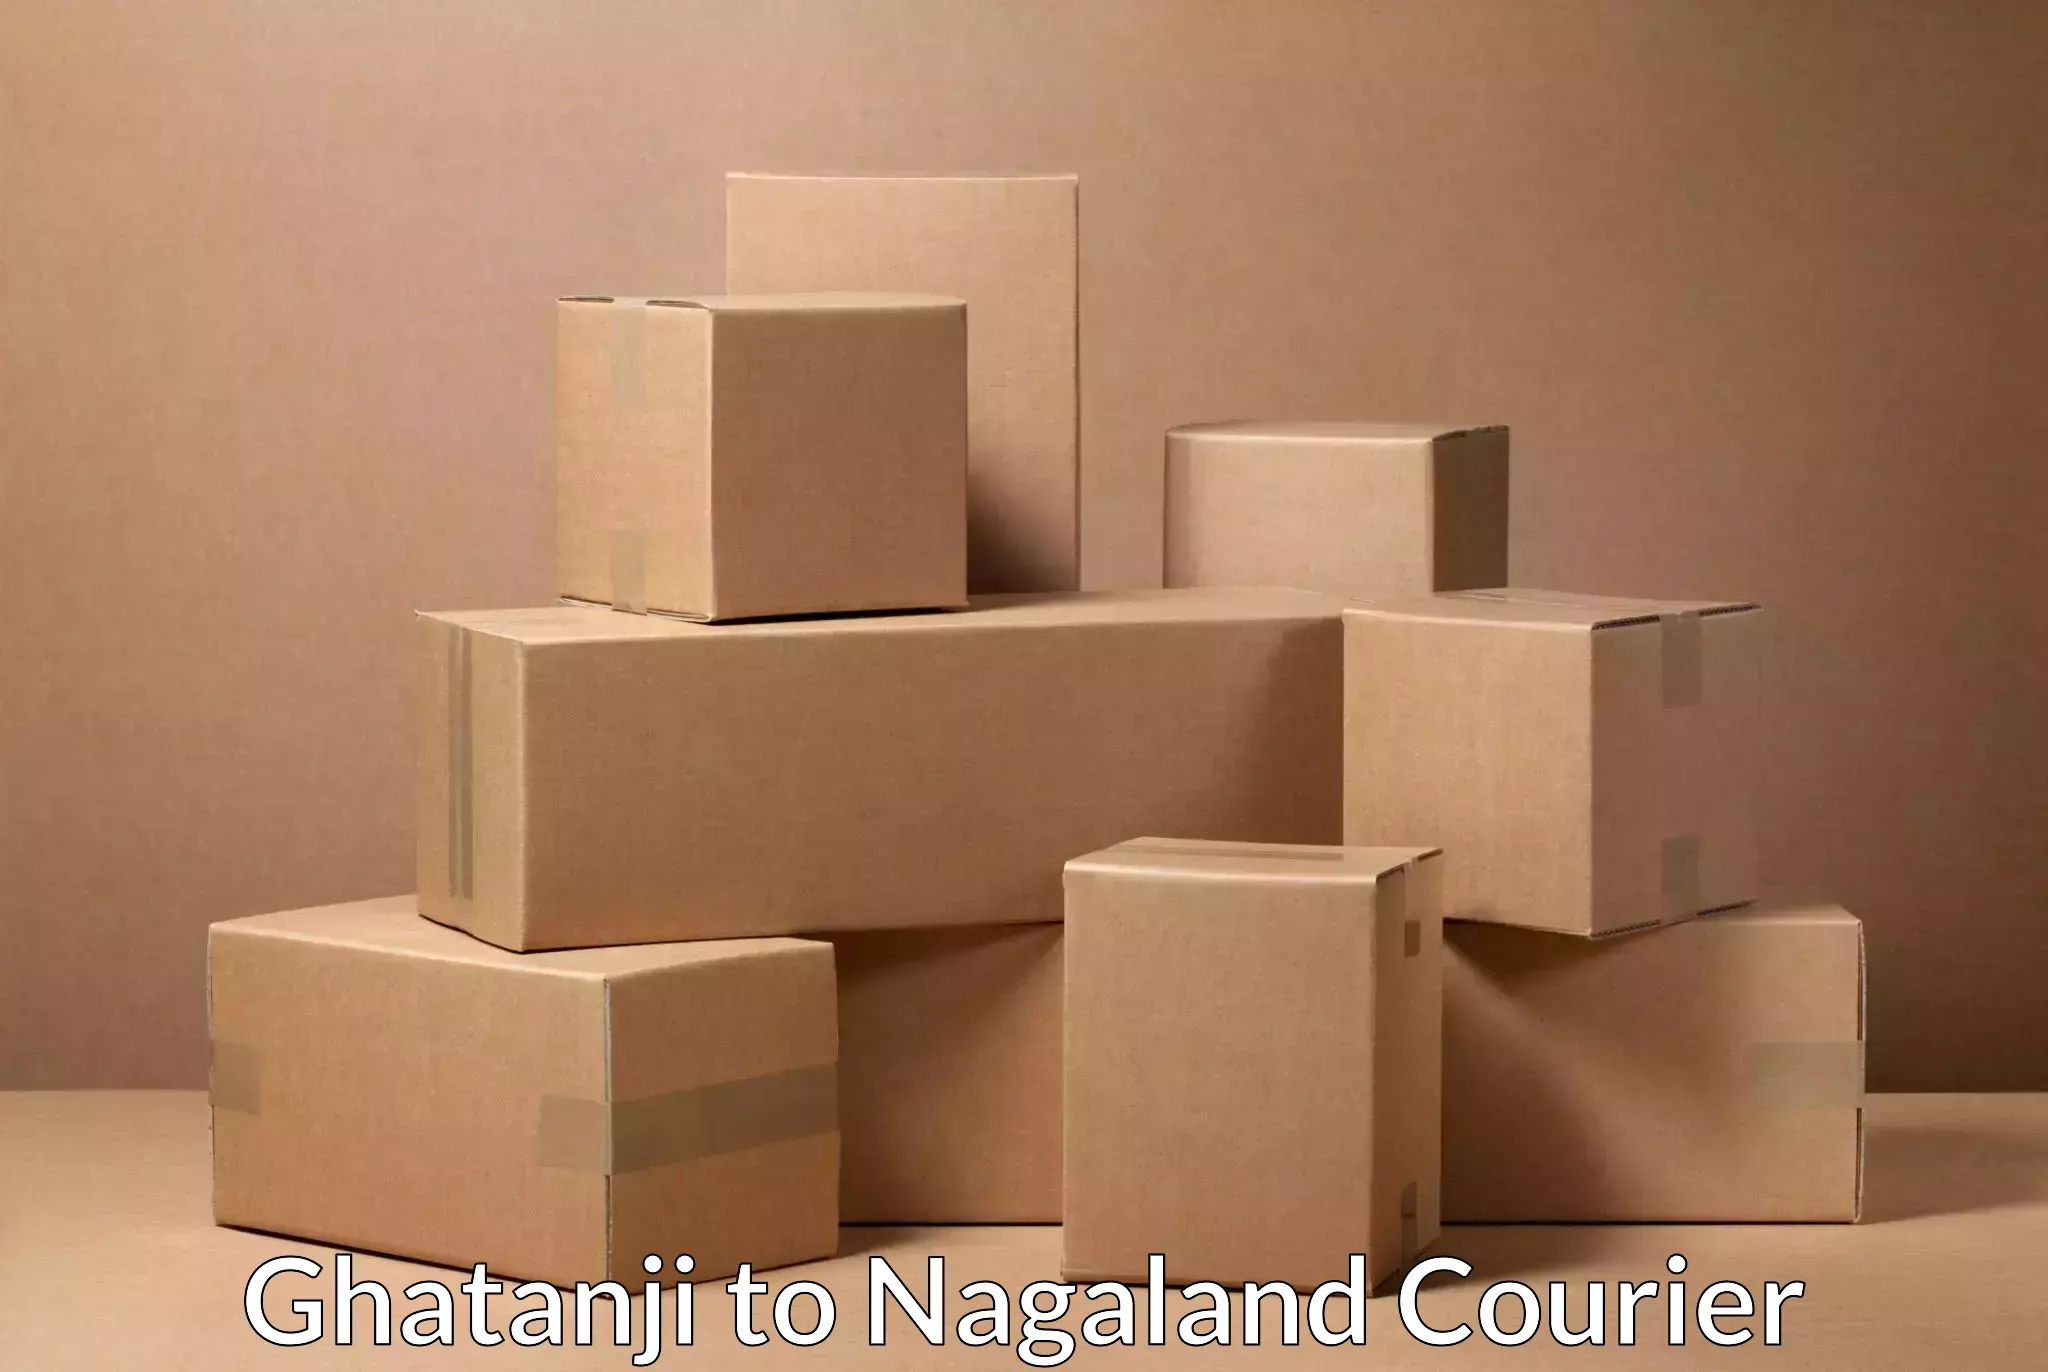 International courier networks Ghatanji to Nagaland